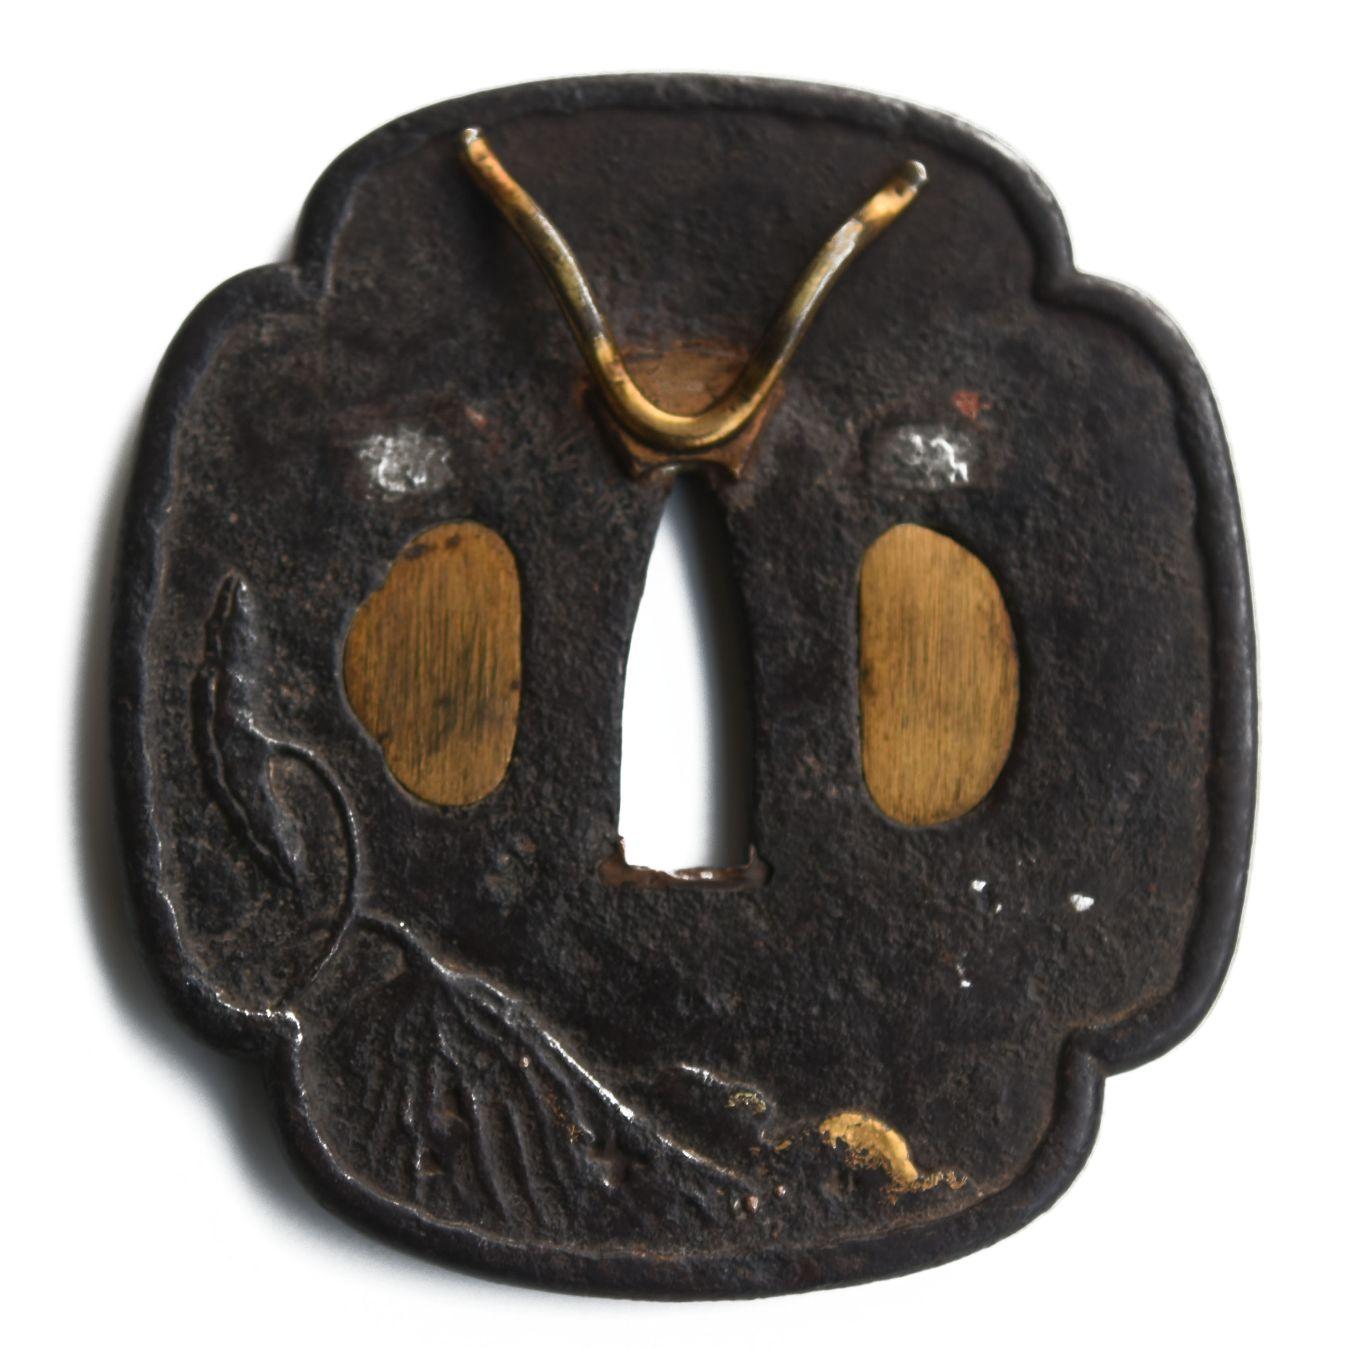 19th Century Tsuba former Japanese Katana guard in bronze and gilding, diameter approximately 8 cm.